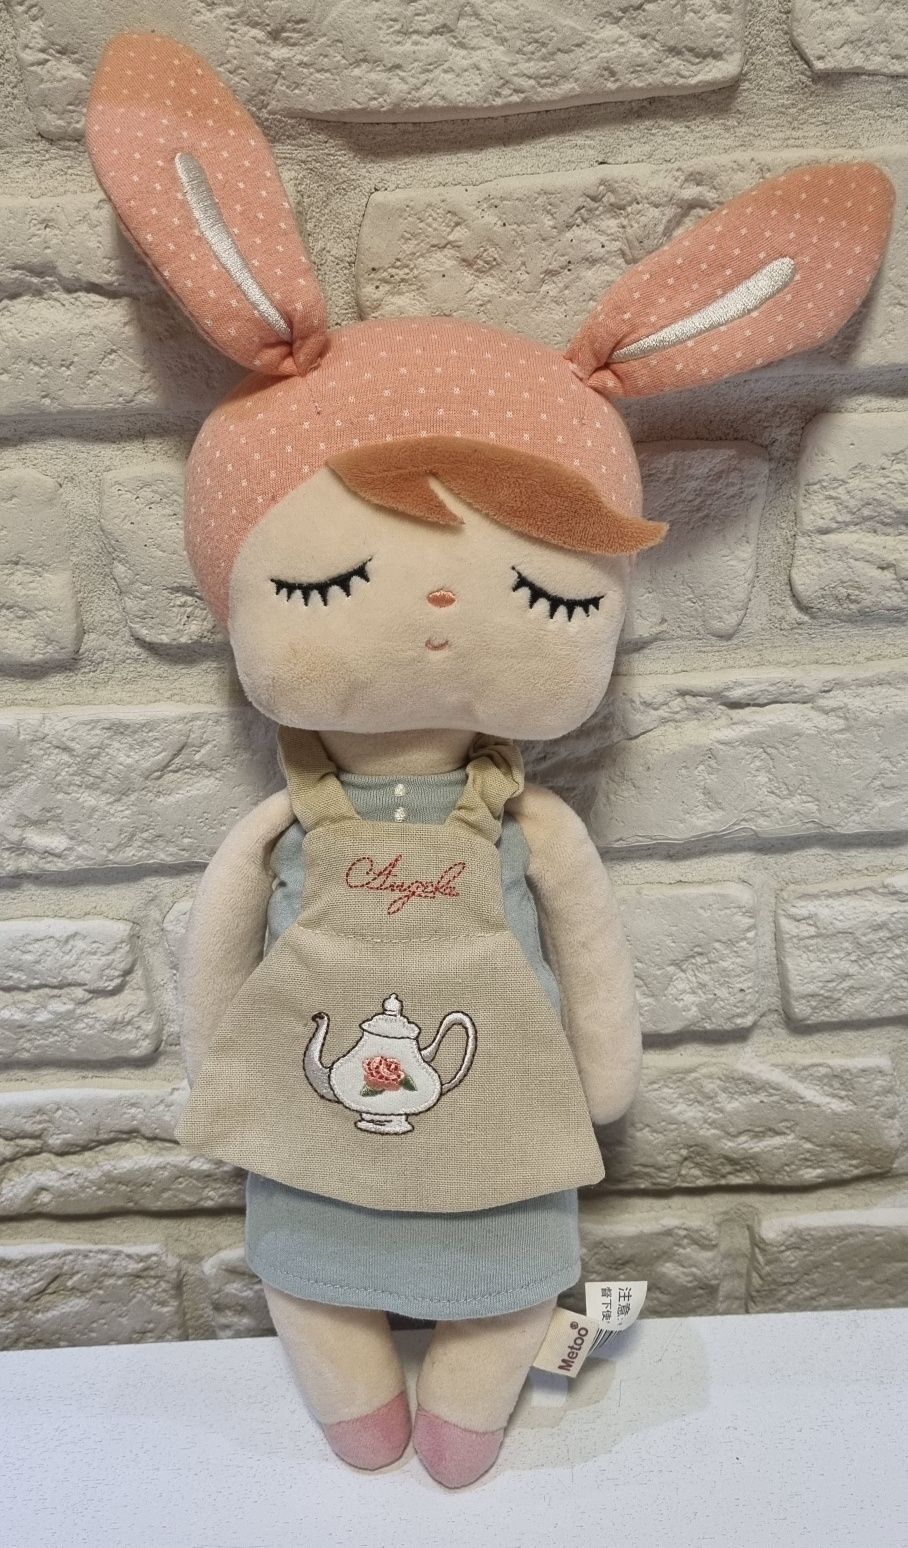 Pluszowa lalka Angela króliczek - 36 cm, marki Metoo